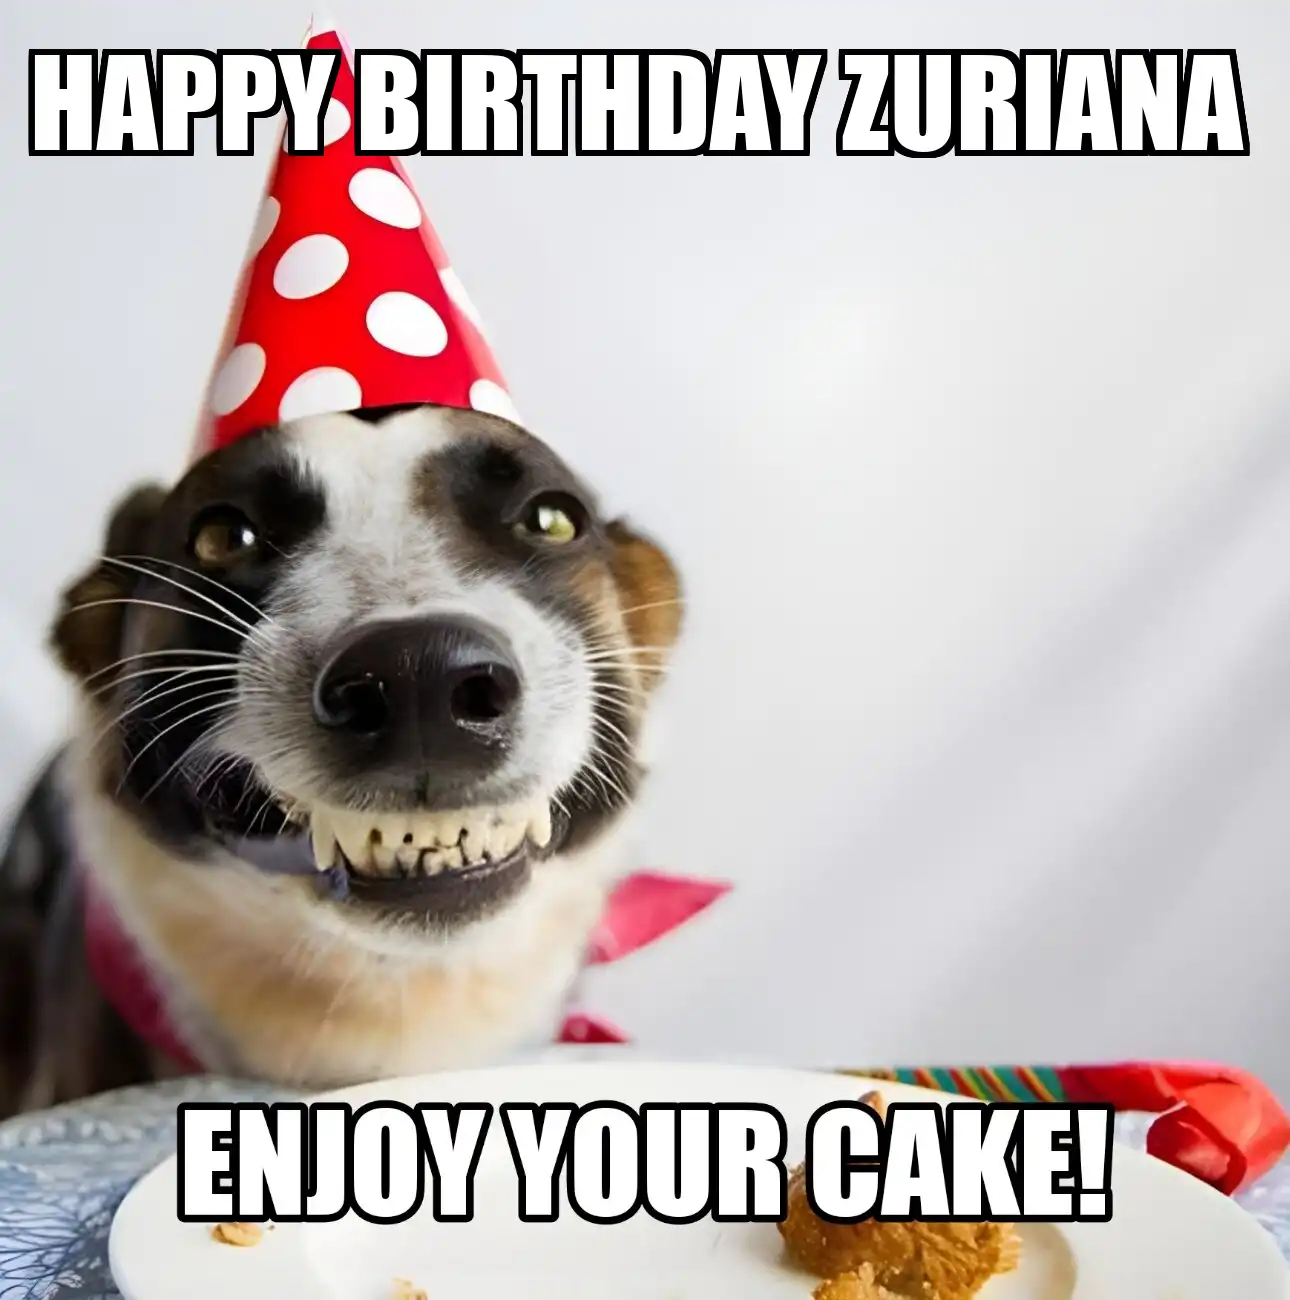 Happy Birthday Zuriana Enjoy Your Cake Dog Meme